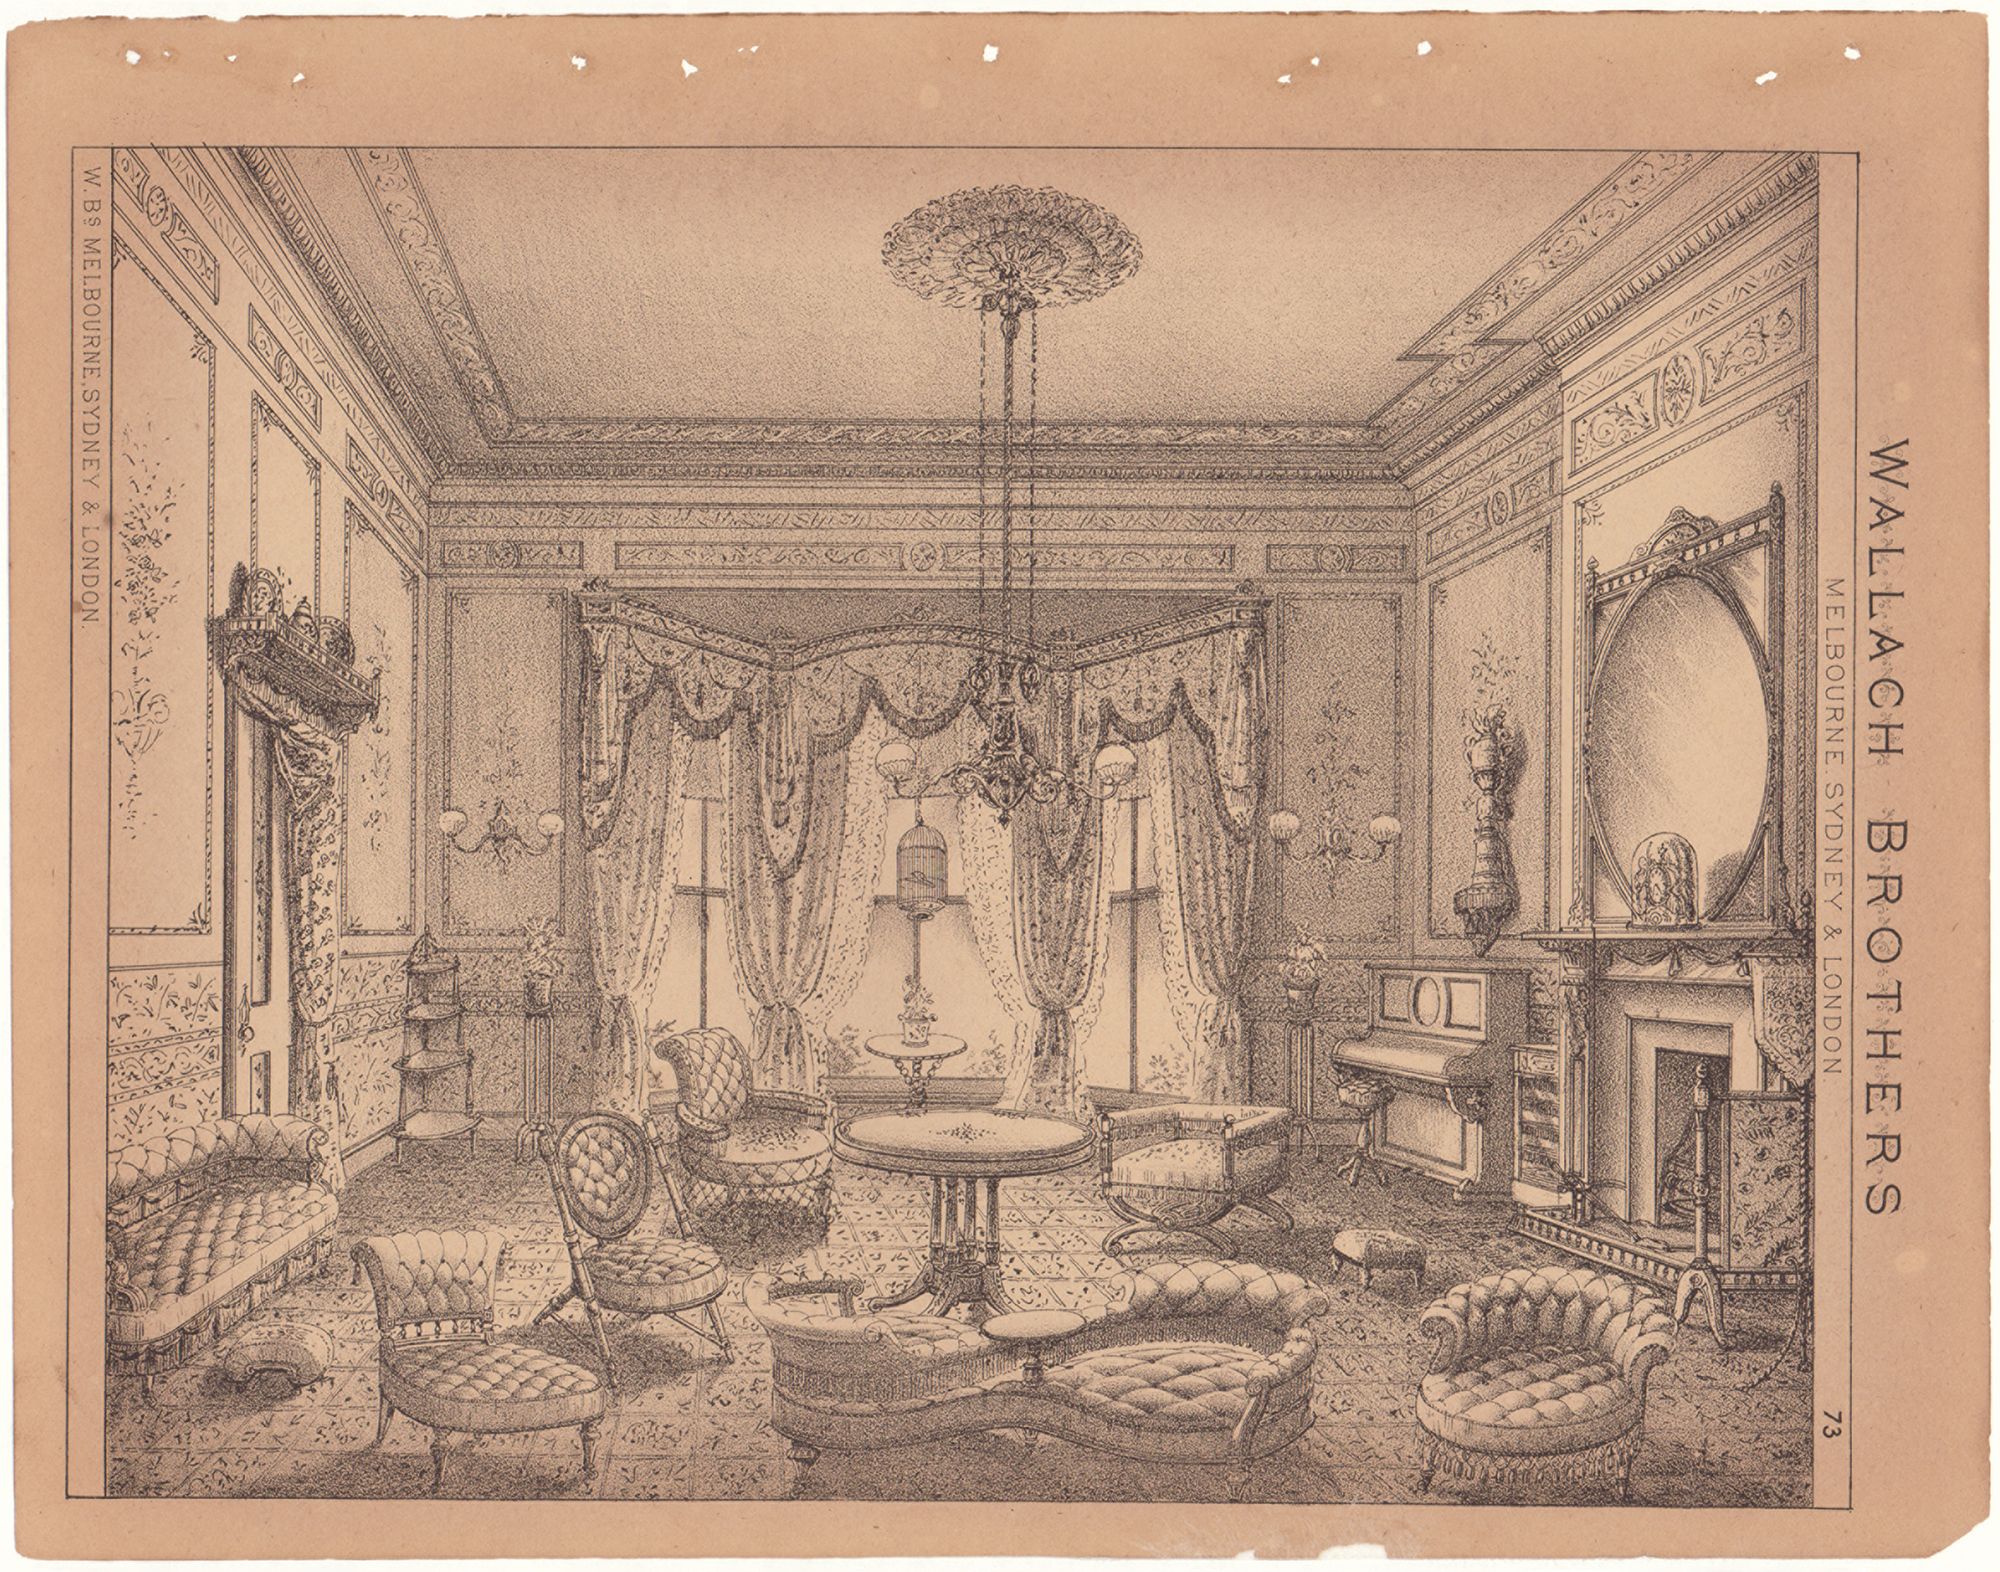 Illustration of a victorian formal living room